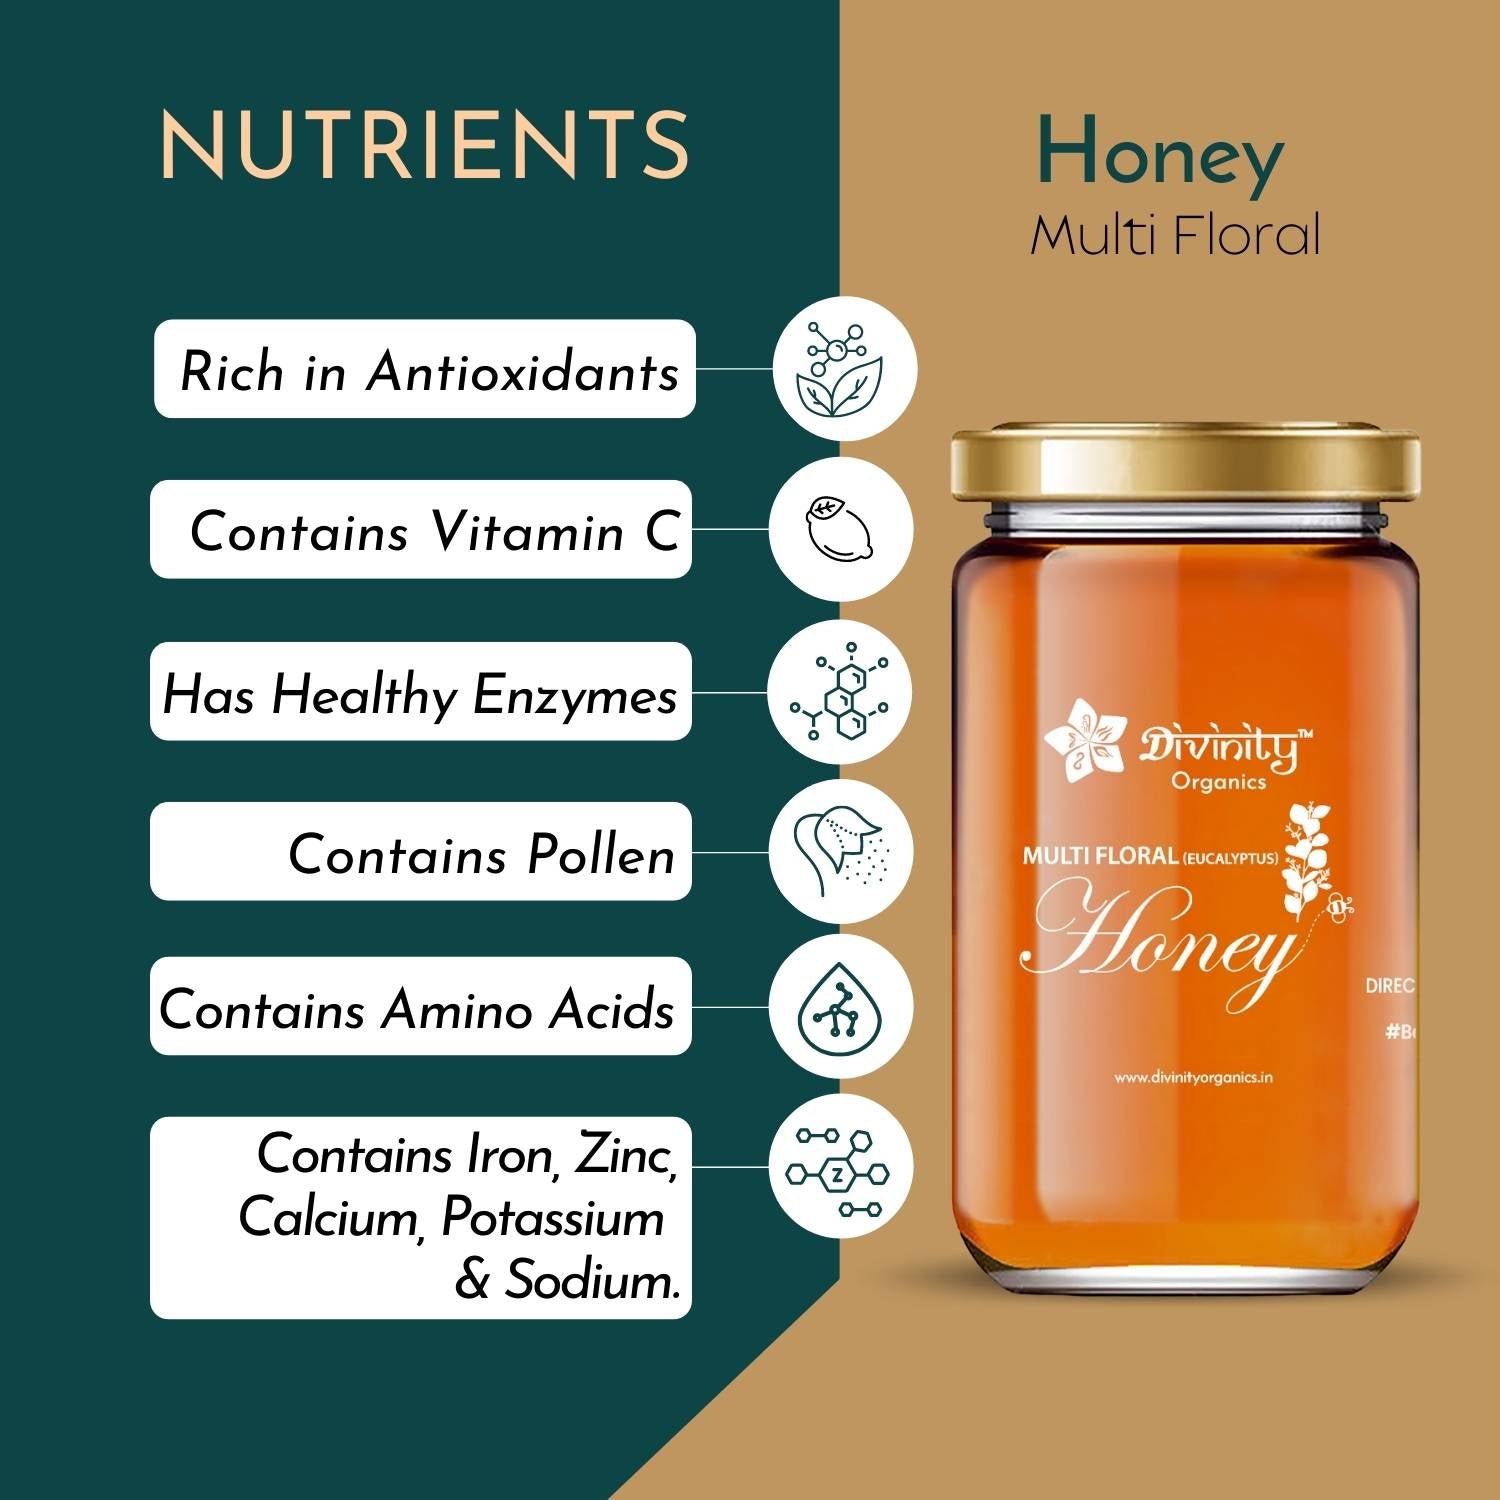 Divinity Organics Multi-floral honey (Eucalyptus) Nutrients